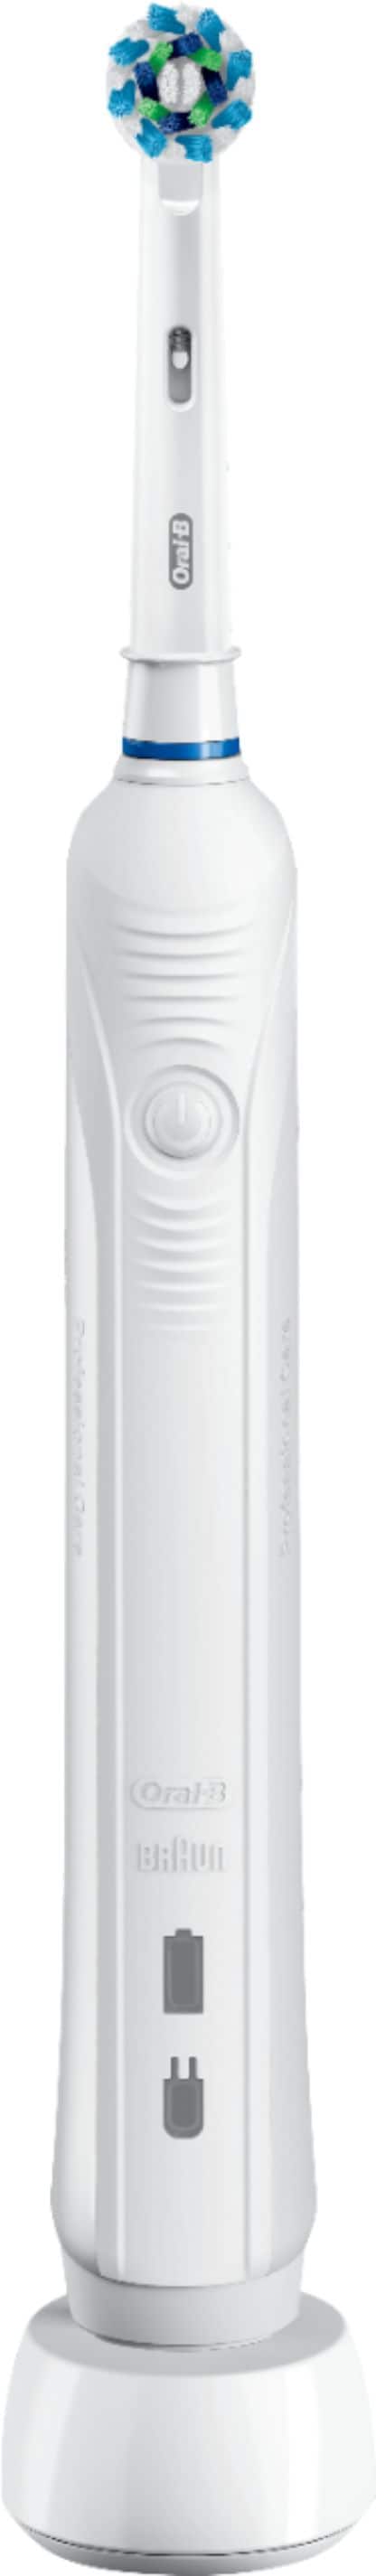 Oral-B - Pro 1000 Electric Toothbrush - White_1